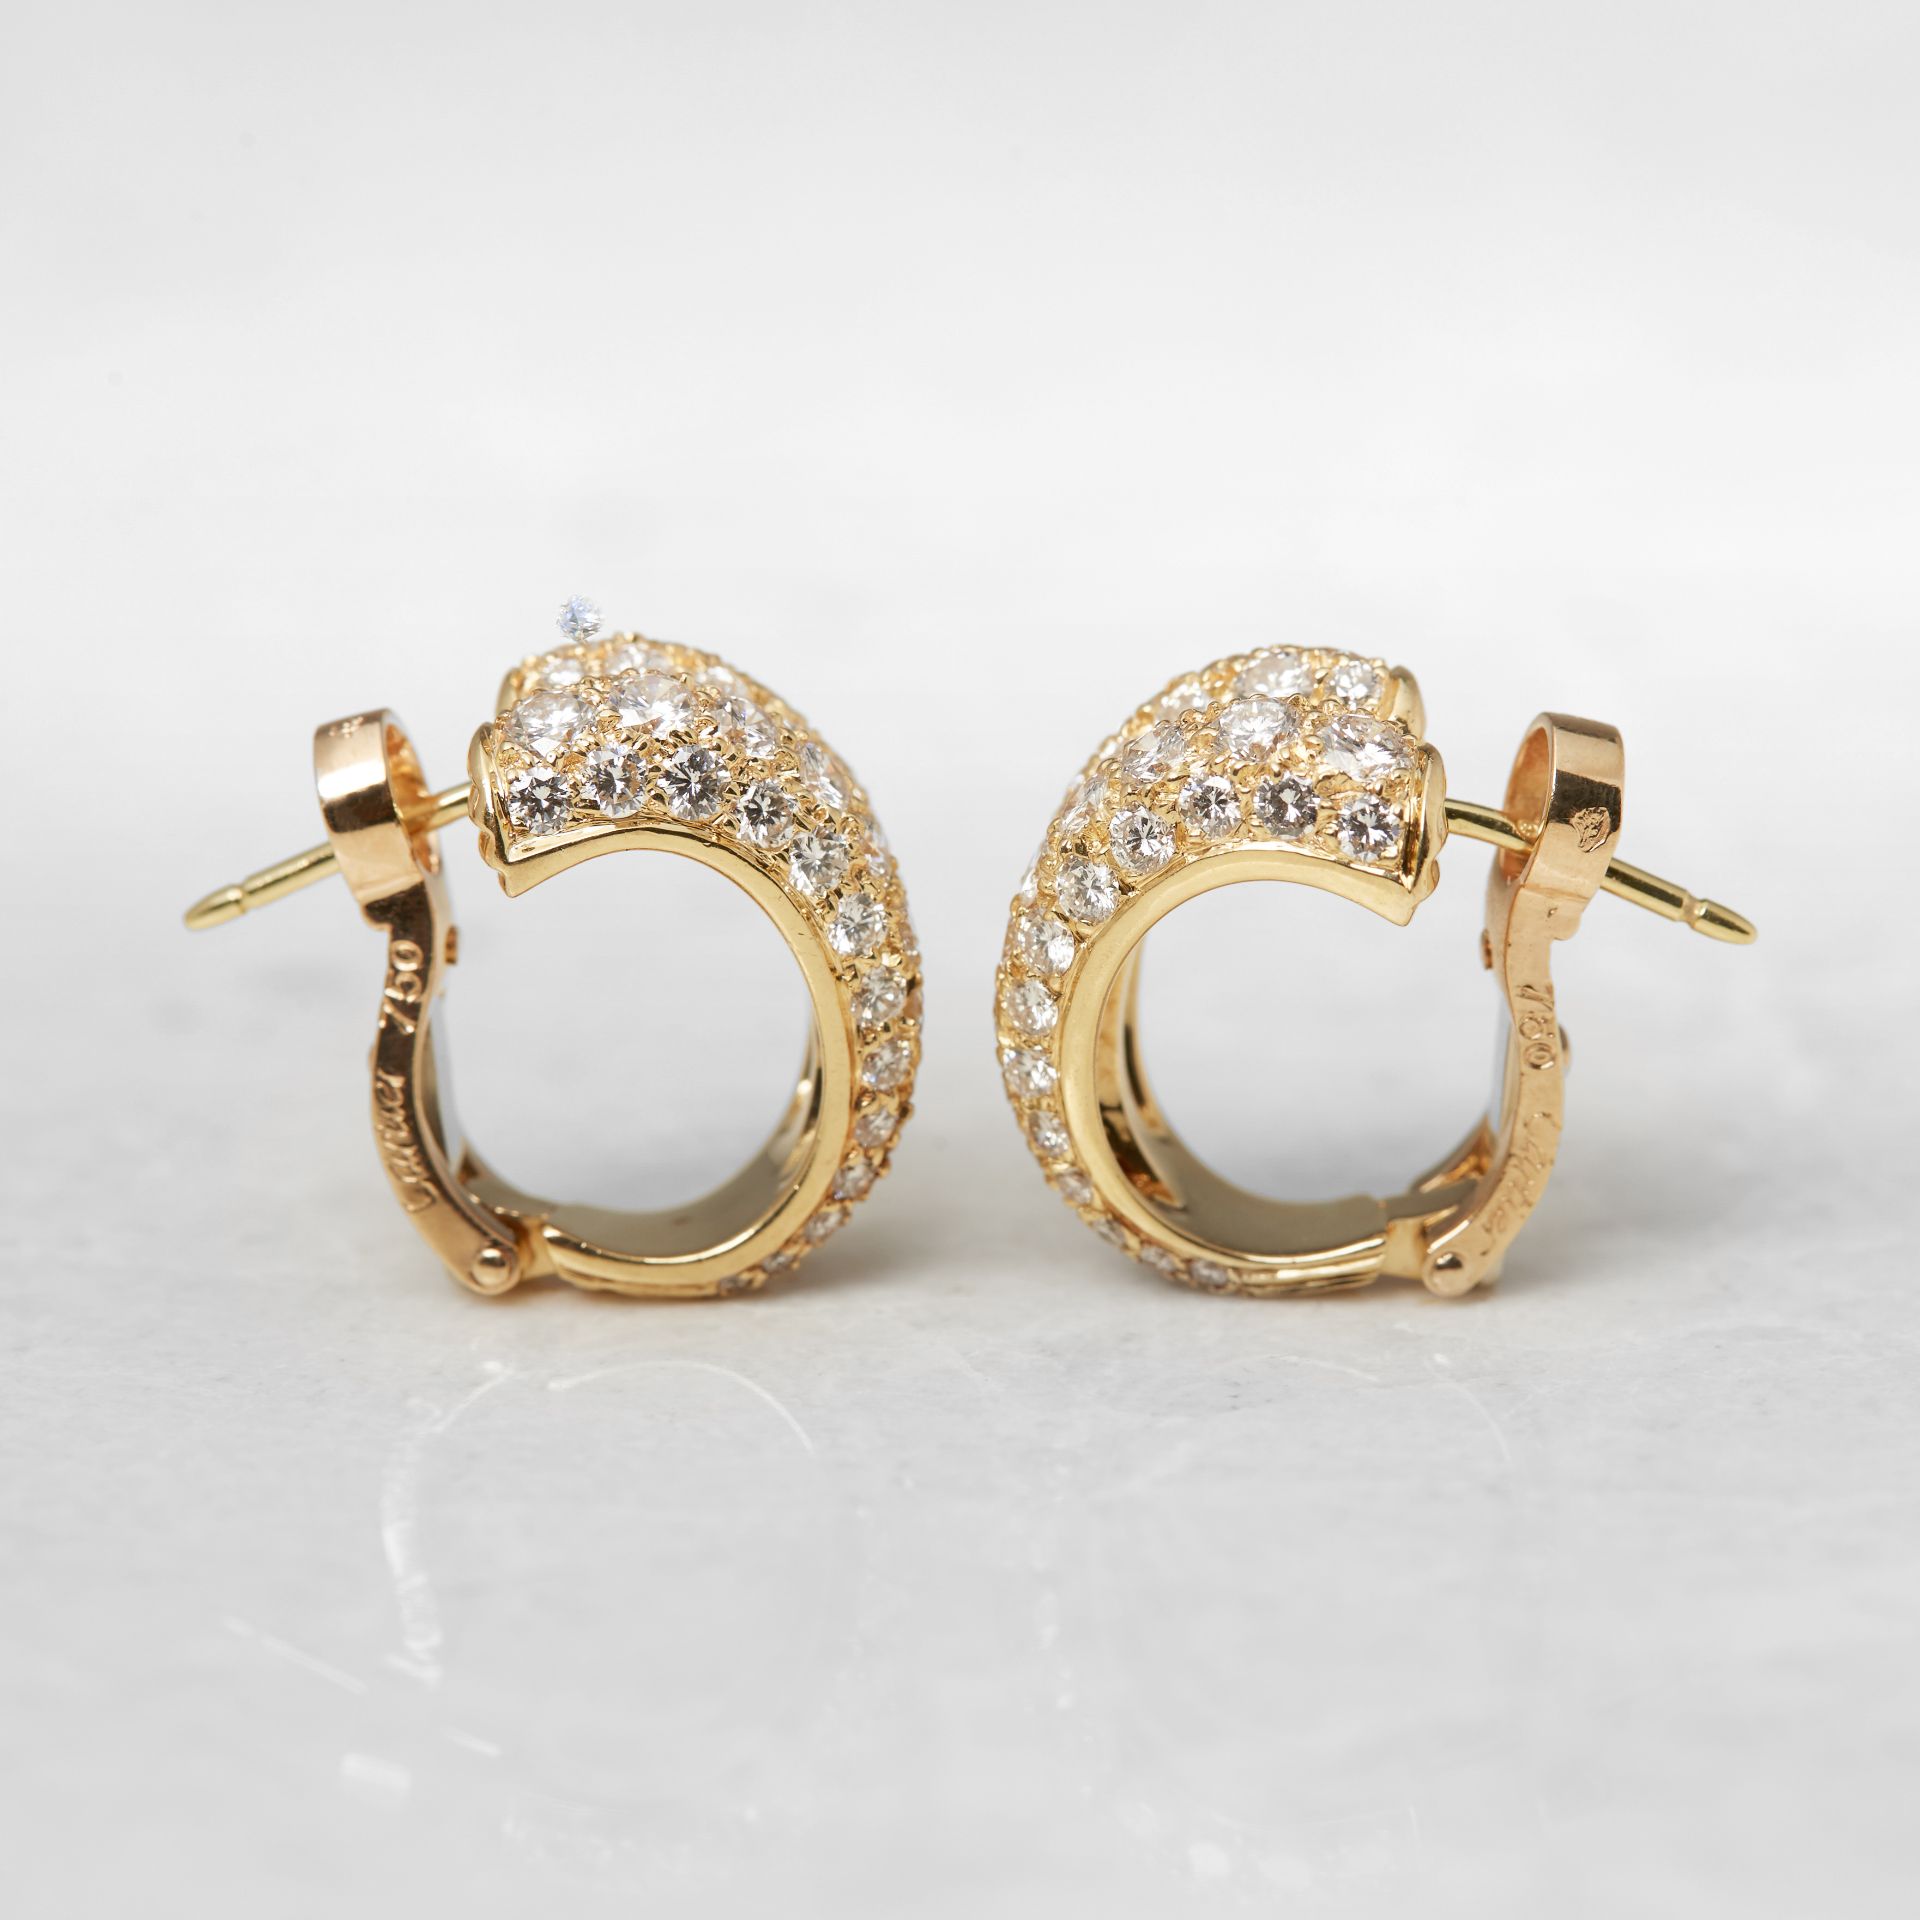 Cartier 18k Yellow Gold Double Hoop Diamond Earrings - Image 11 of 20